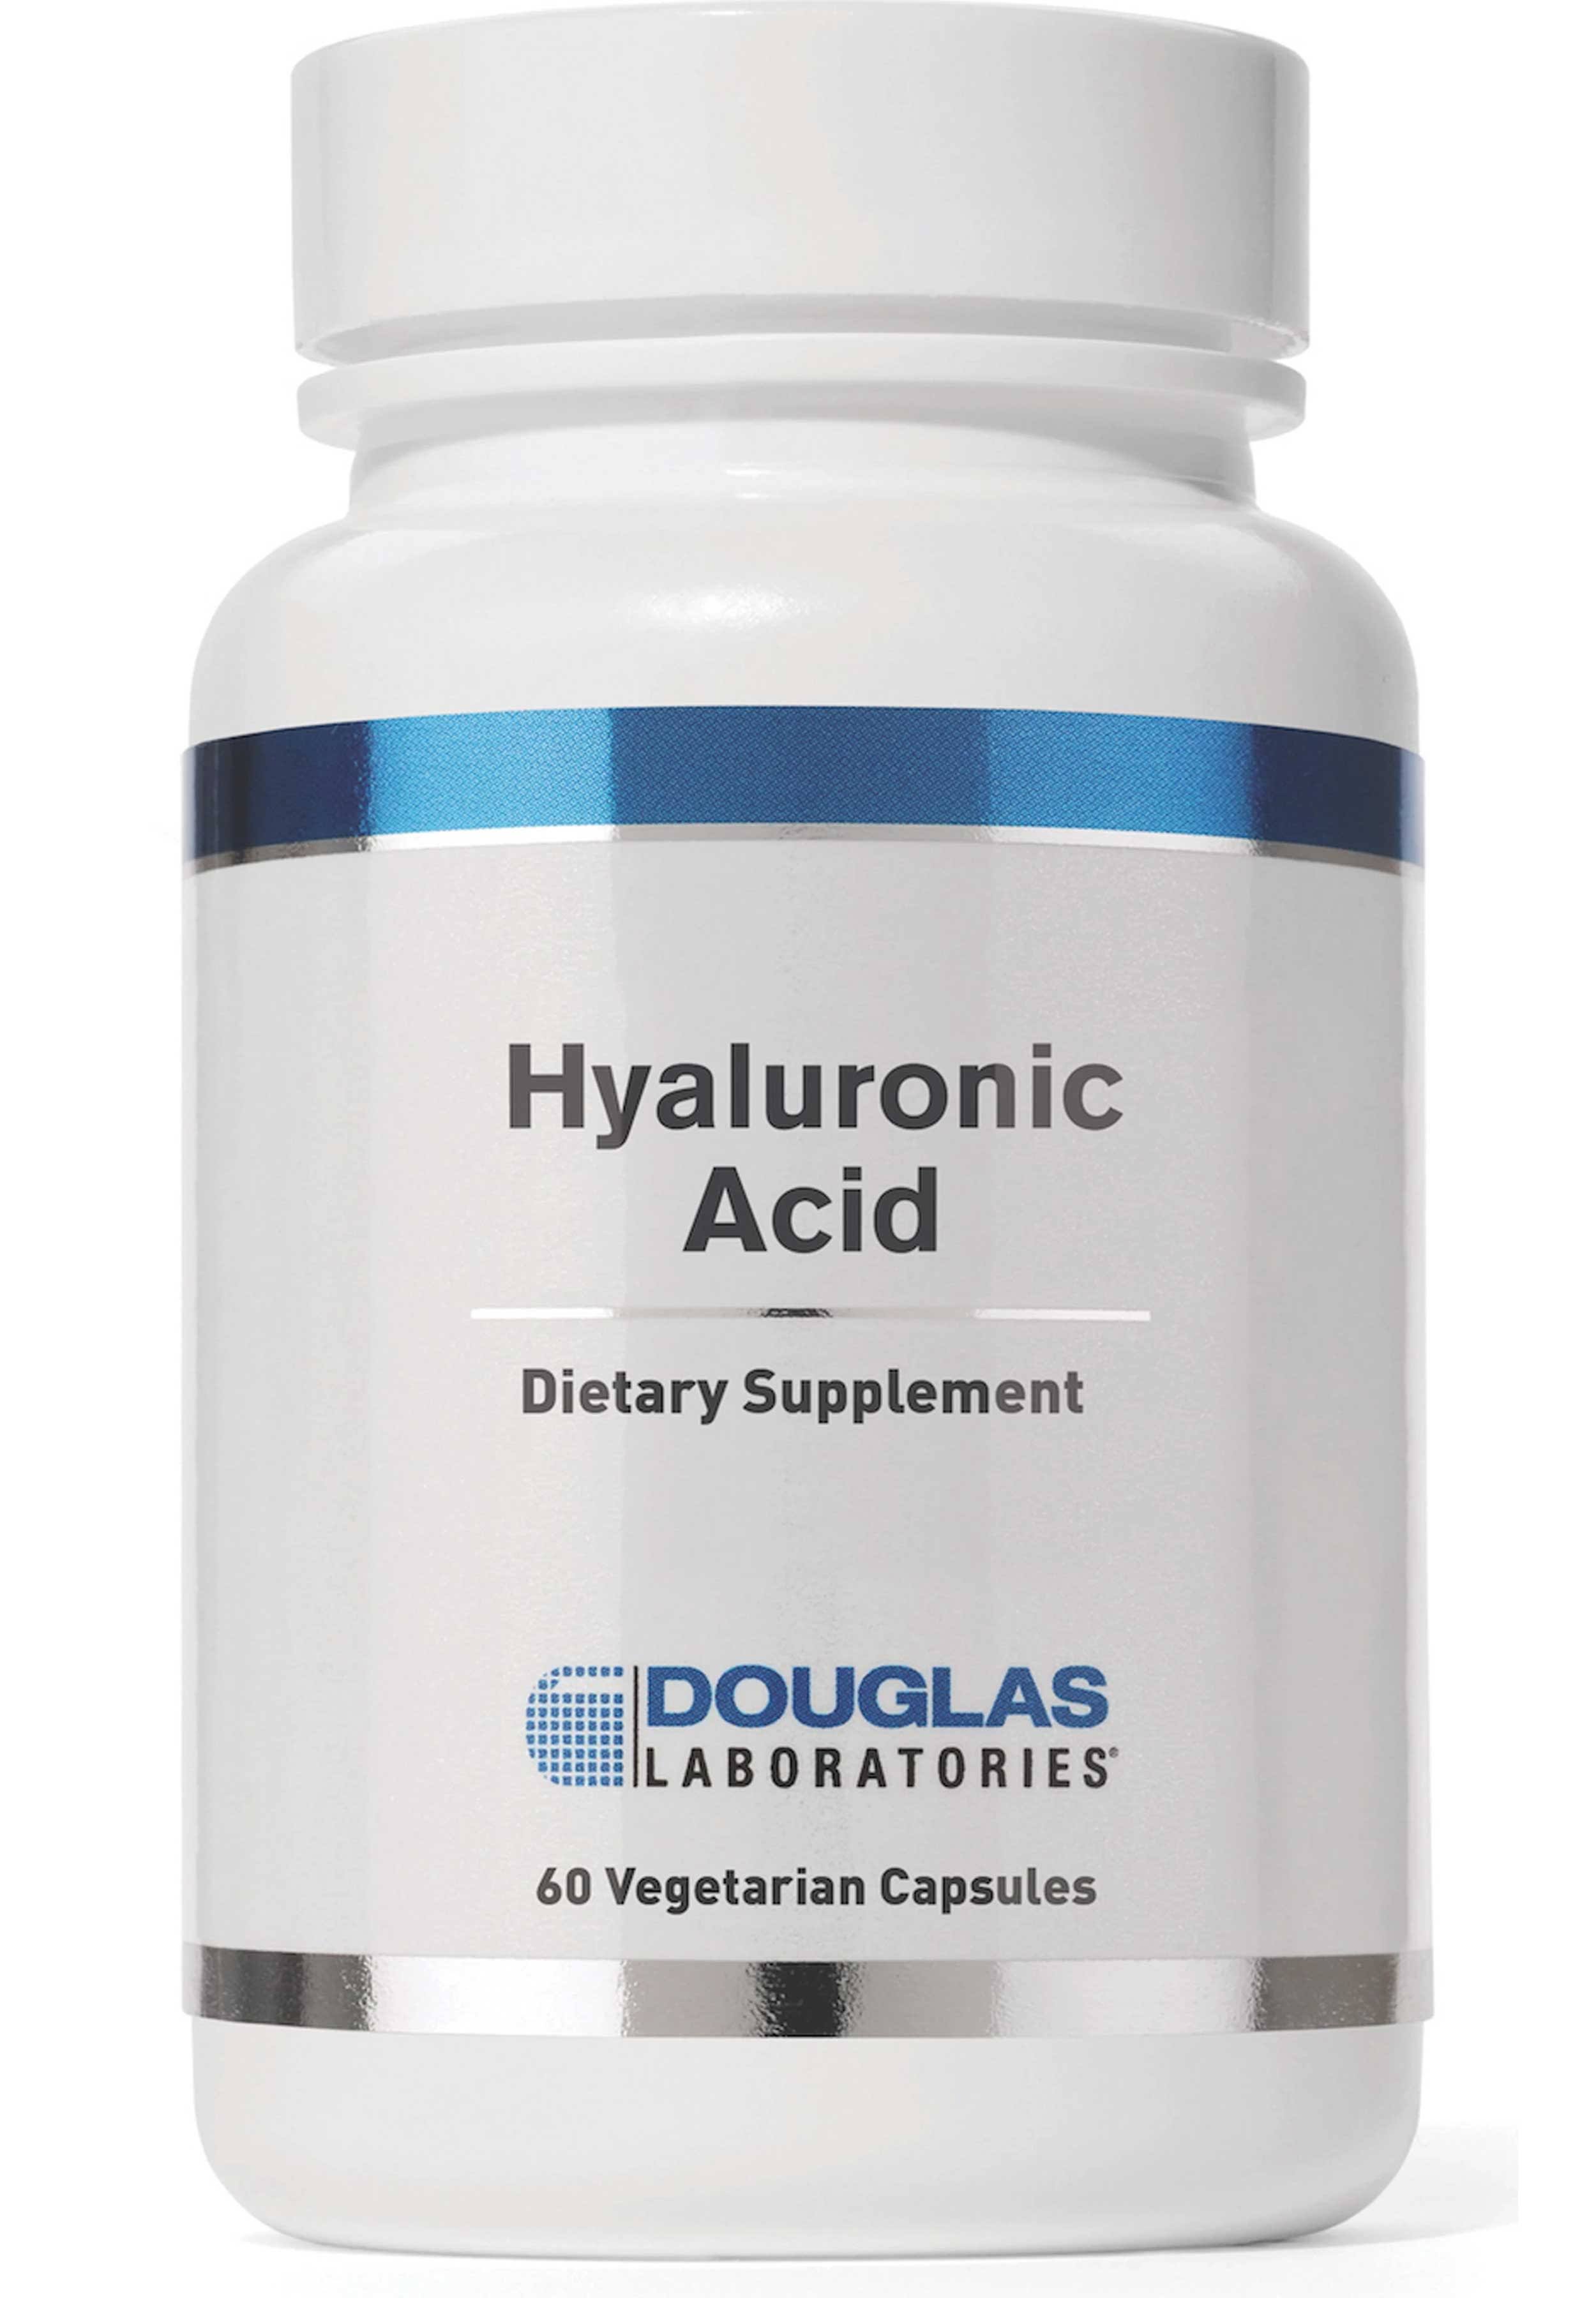 Douglas Laboratories - Hyaluronic Acid - 60 Vegetarian Capsules